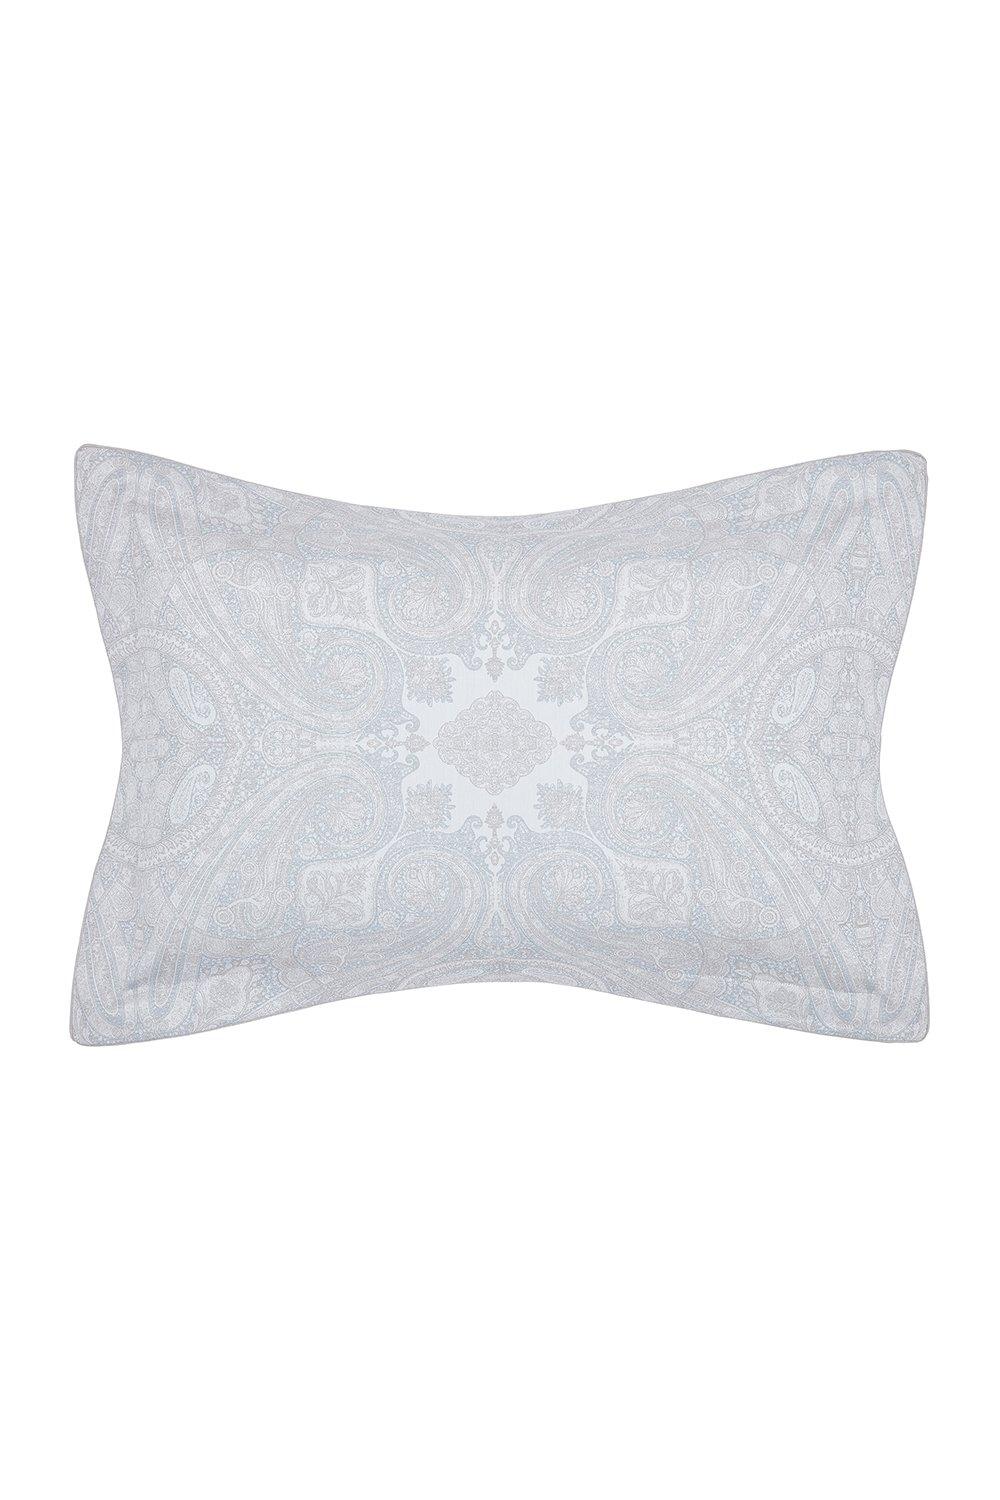 'Elswick Paisley' Cotton Sateen Oxford Pillowcase